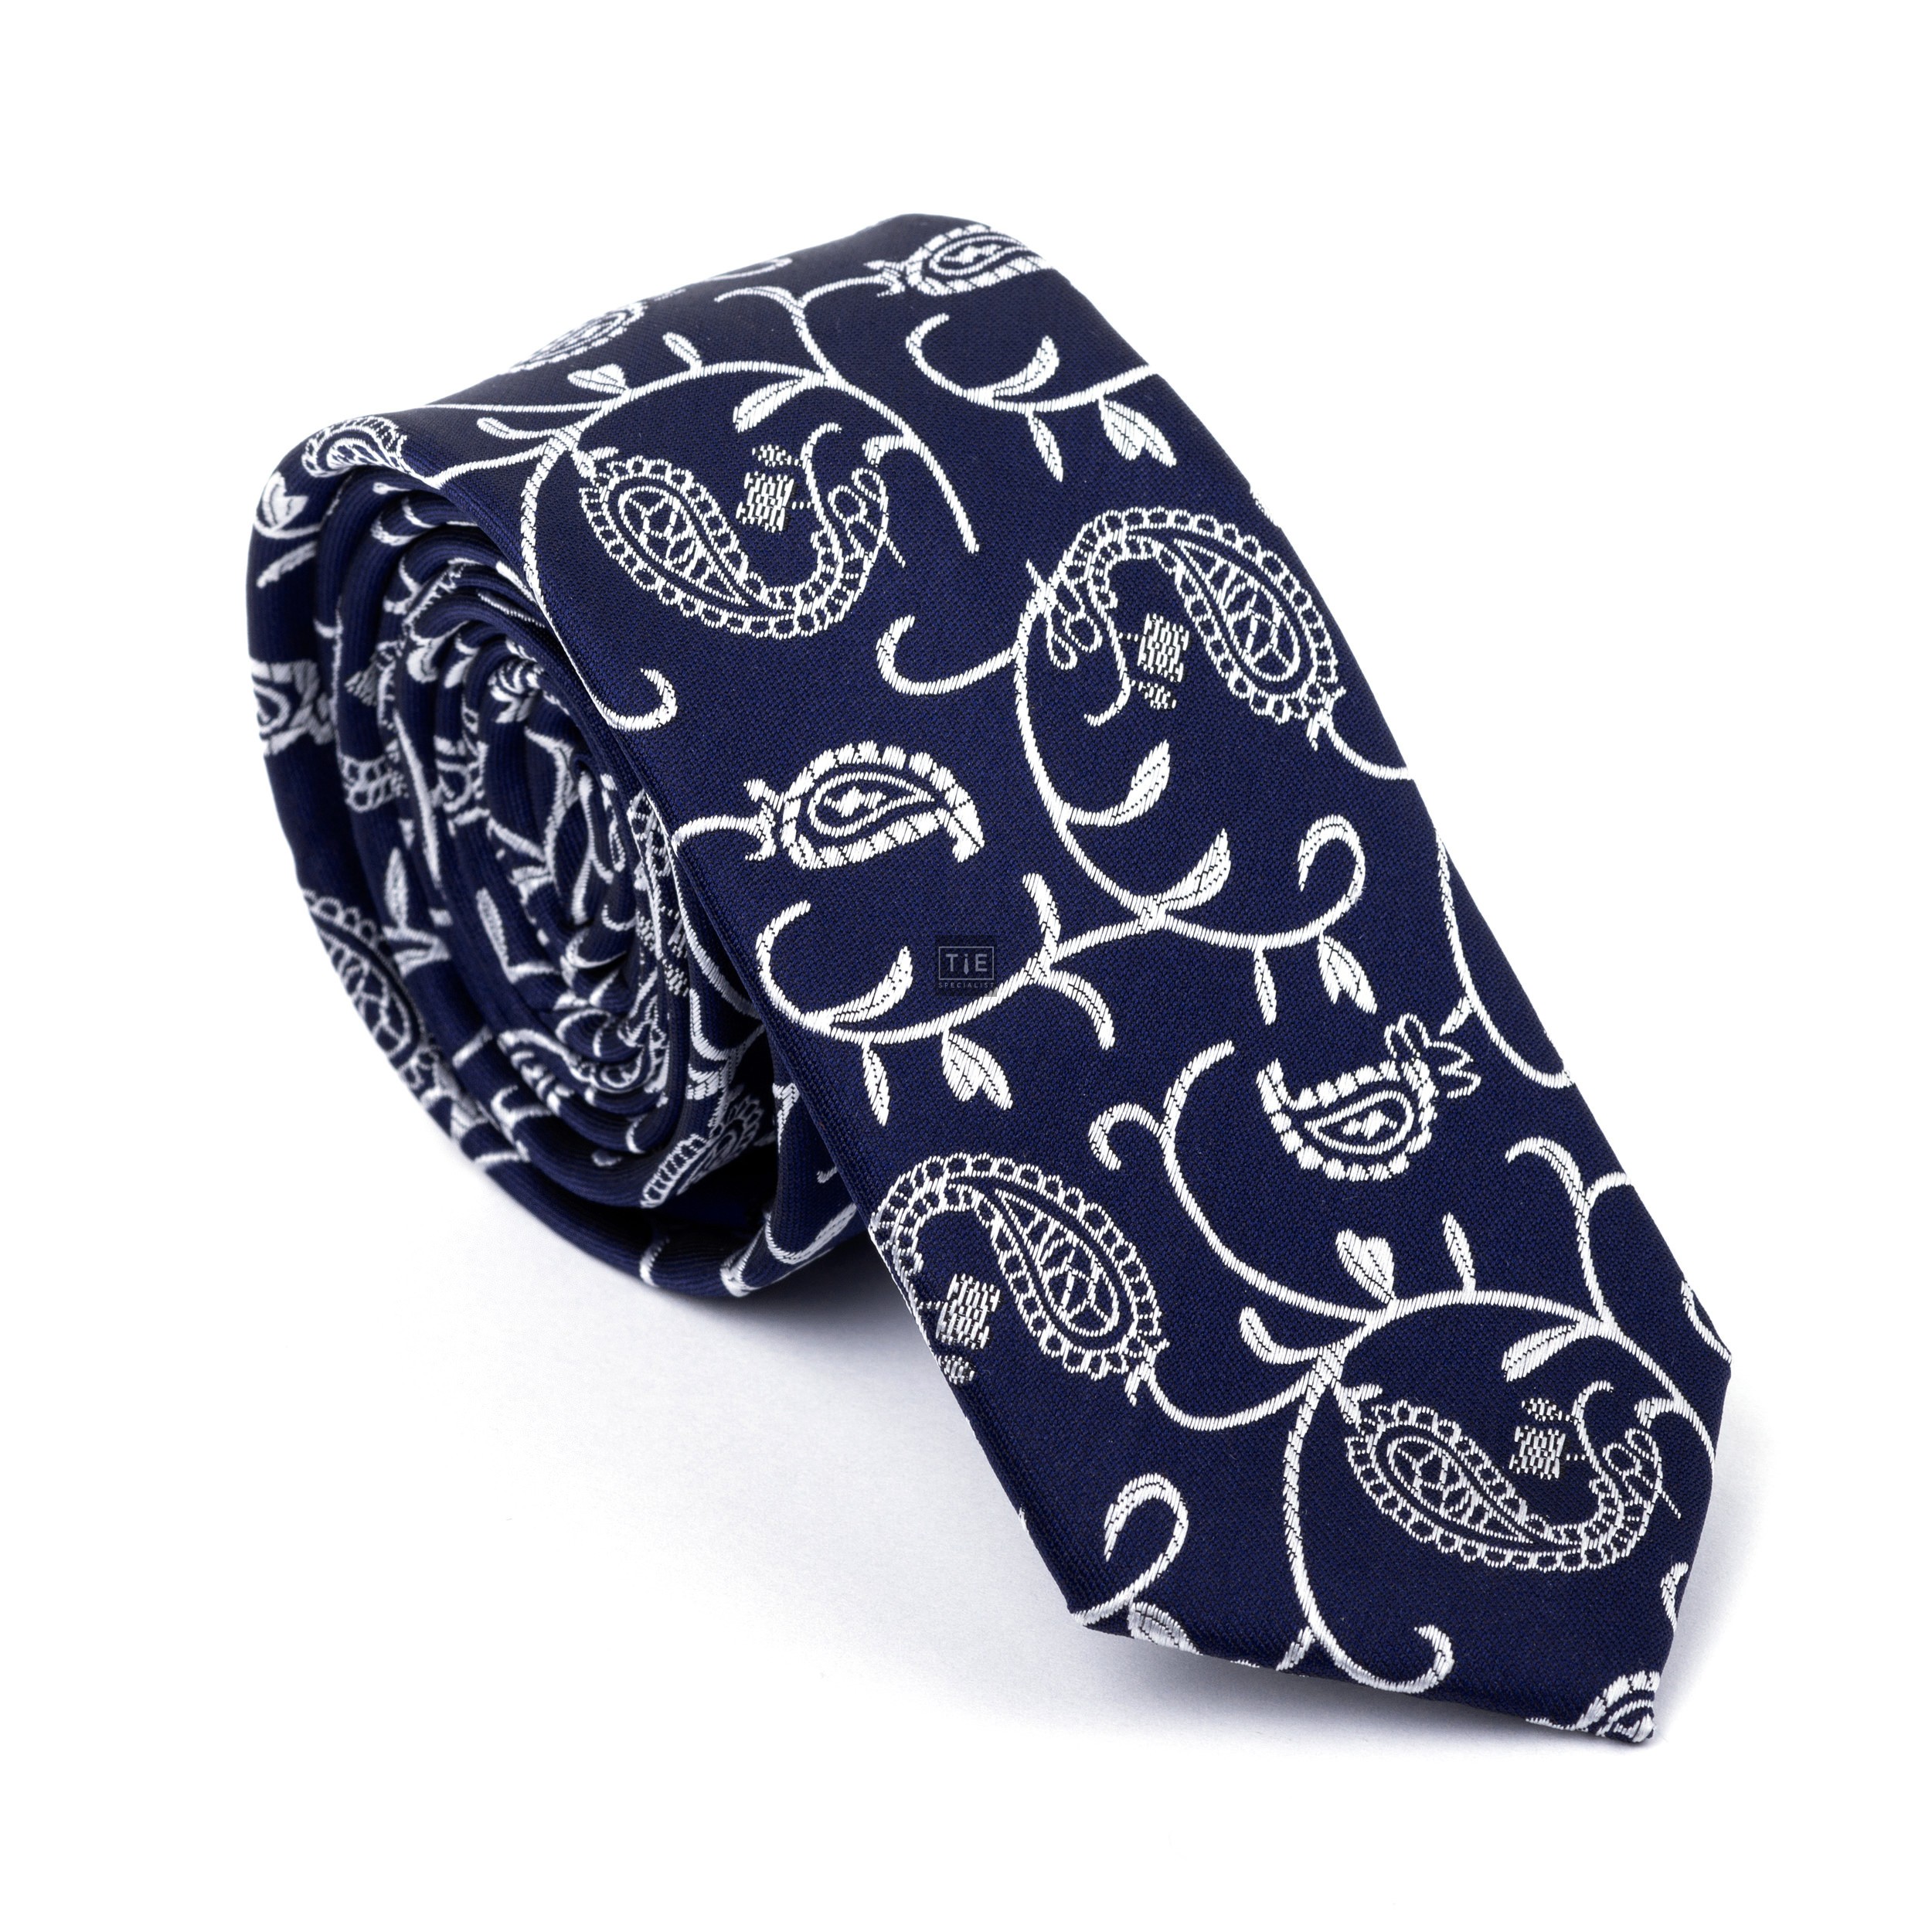 Moonlight Navy Budding Paisley Slim Tie - Patterned Blue Slim Tie